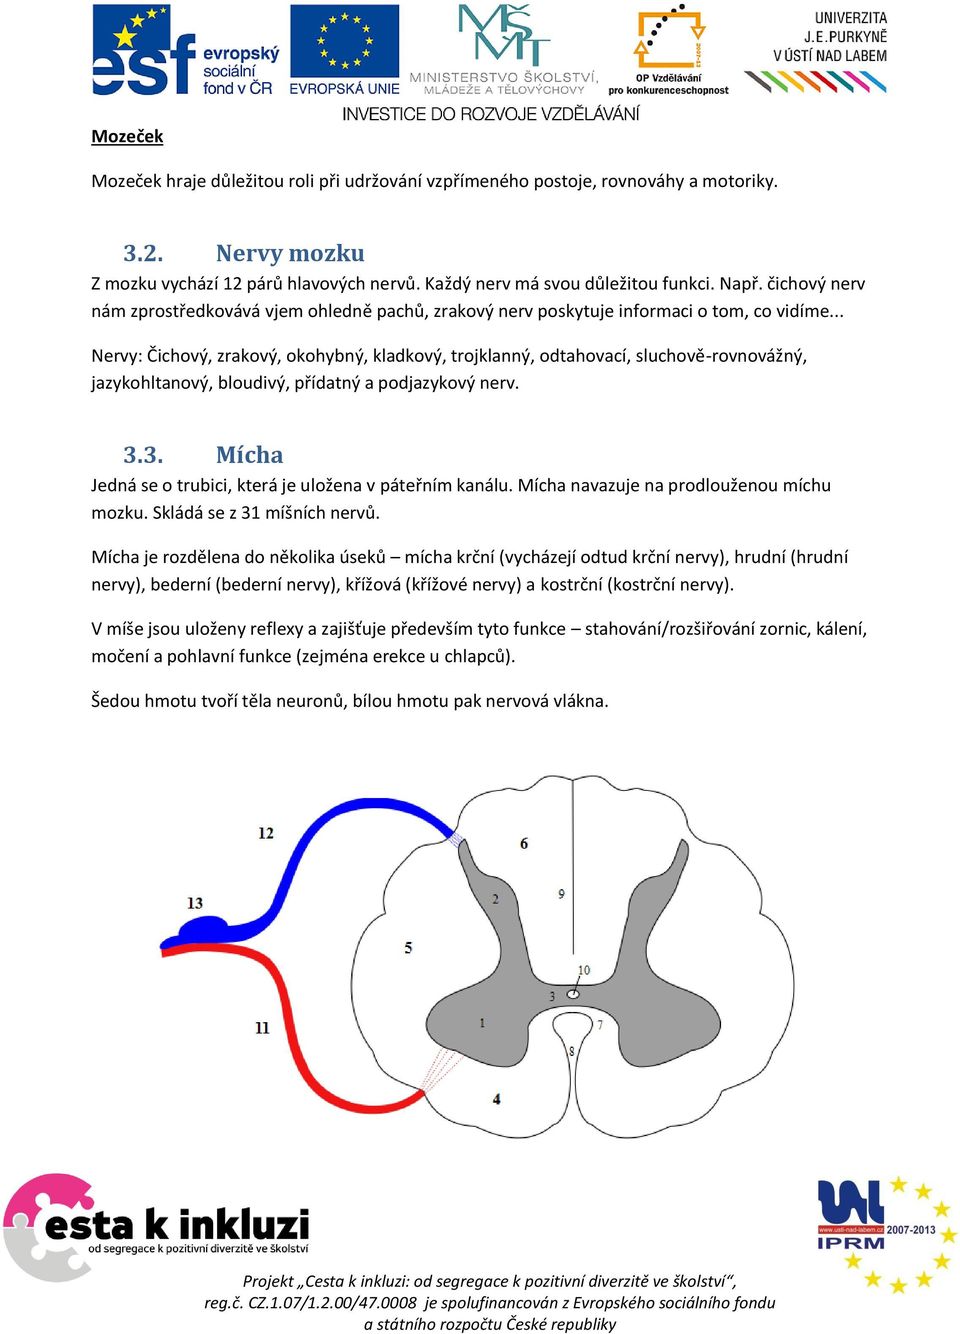 .. Nervy: Čichový, zrakový, okohybný, kladkový, trojklanný, odtahovací, sluchově-rovnovážný, jazykohltanový, bloudivý, přídatný a podjazykový nerv. 3.